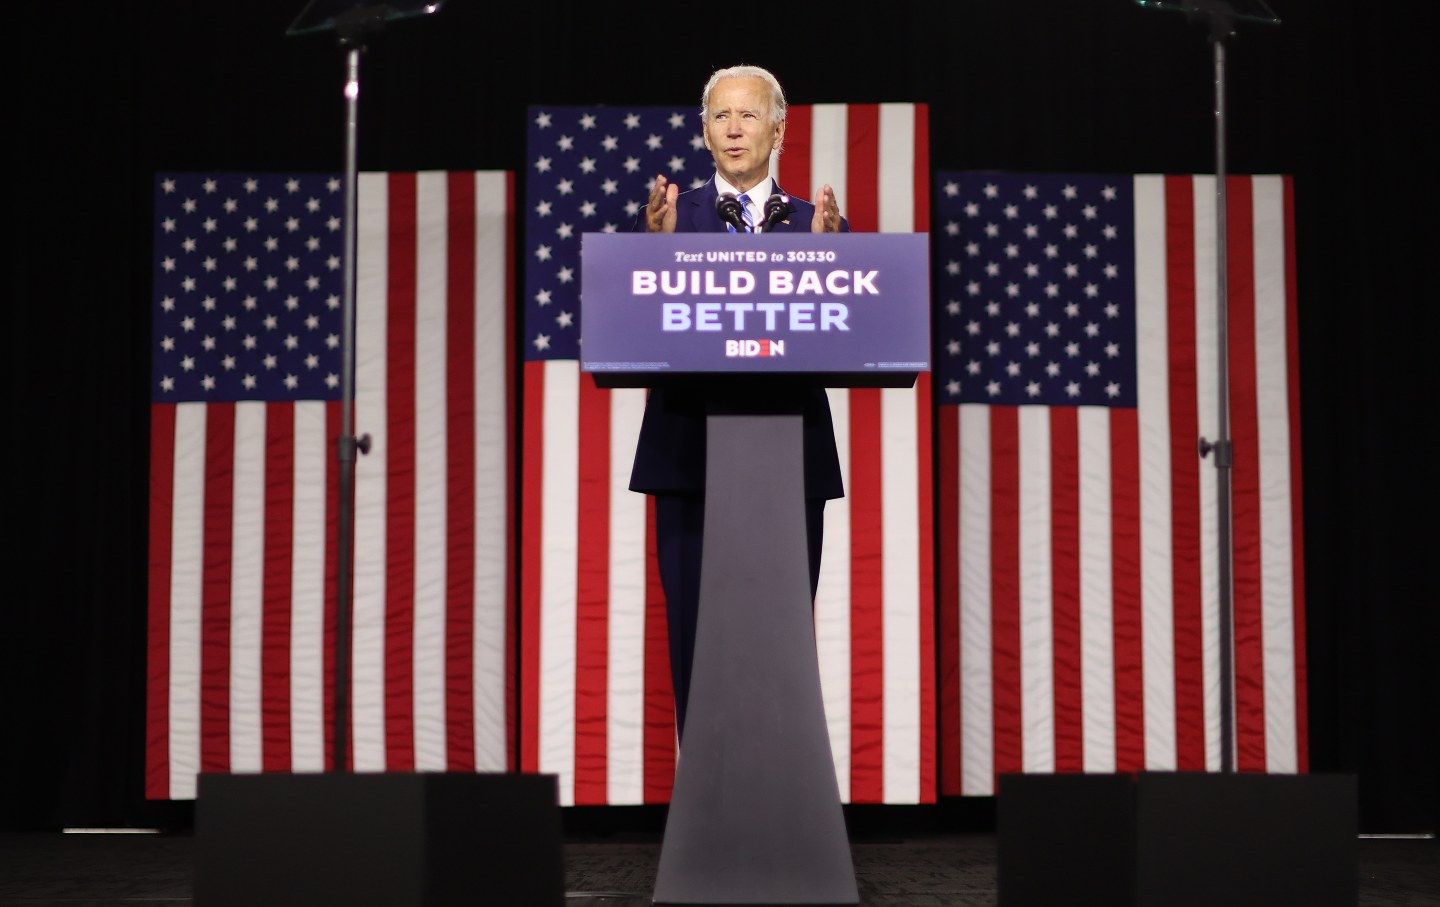 Joe Biden speaks at a podium that reads 